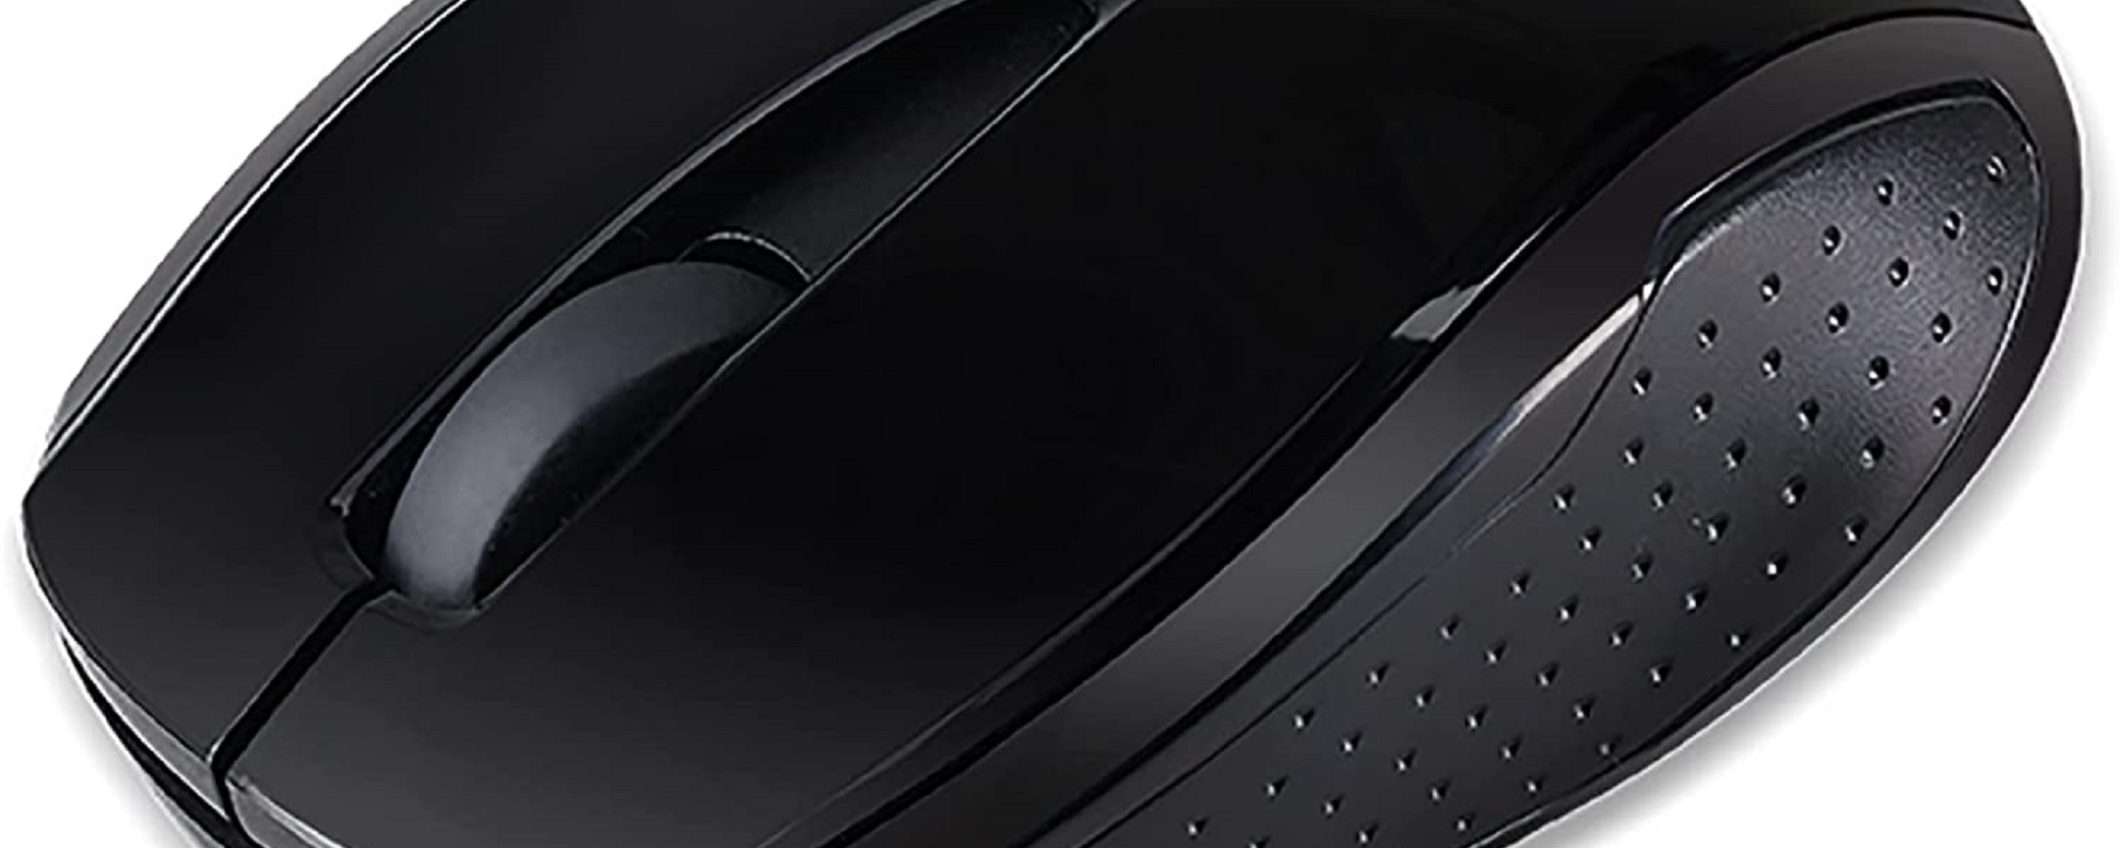 Acer Wireless Mouse a soli 13,99 euro? Va assolutamente preso!